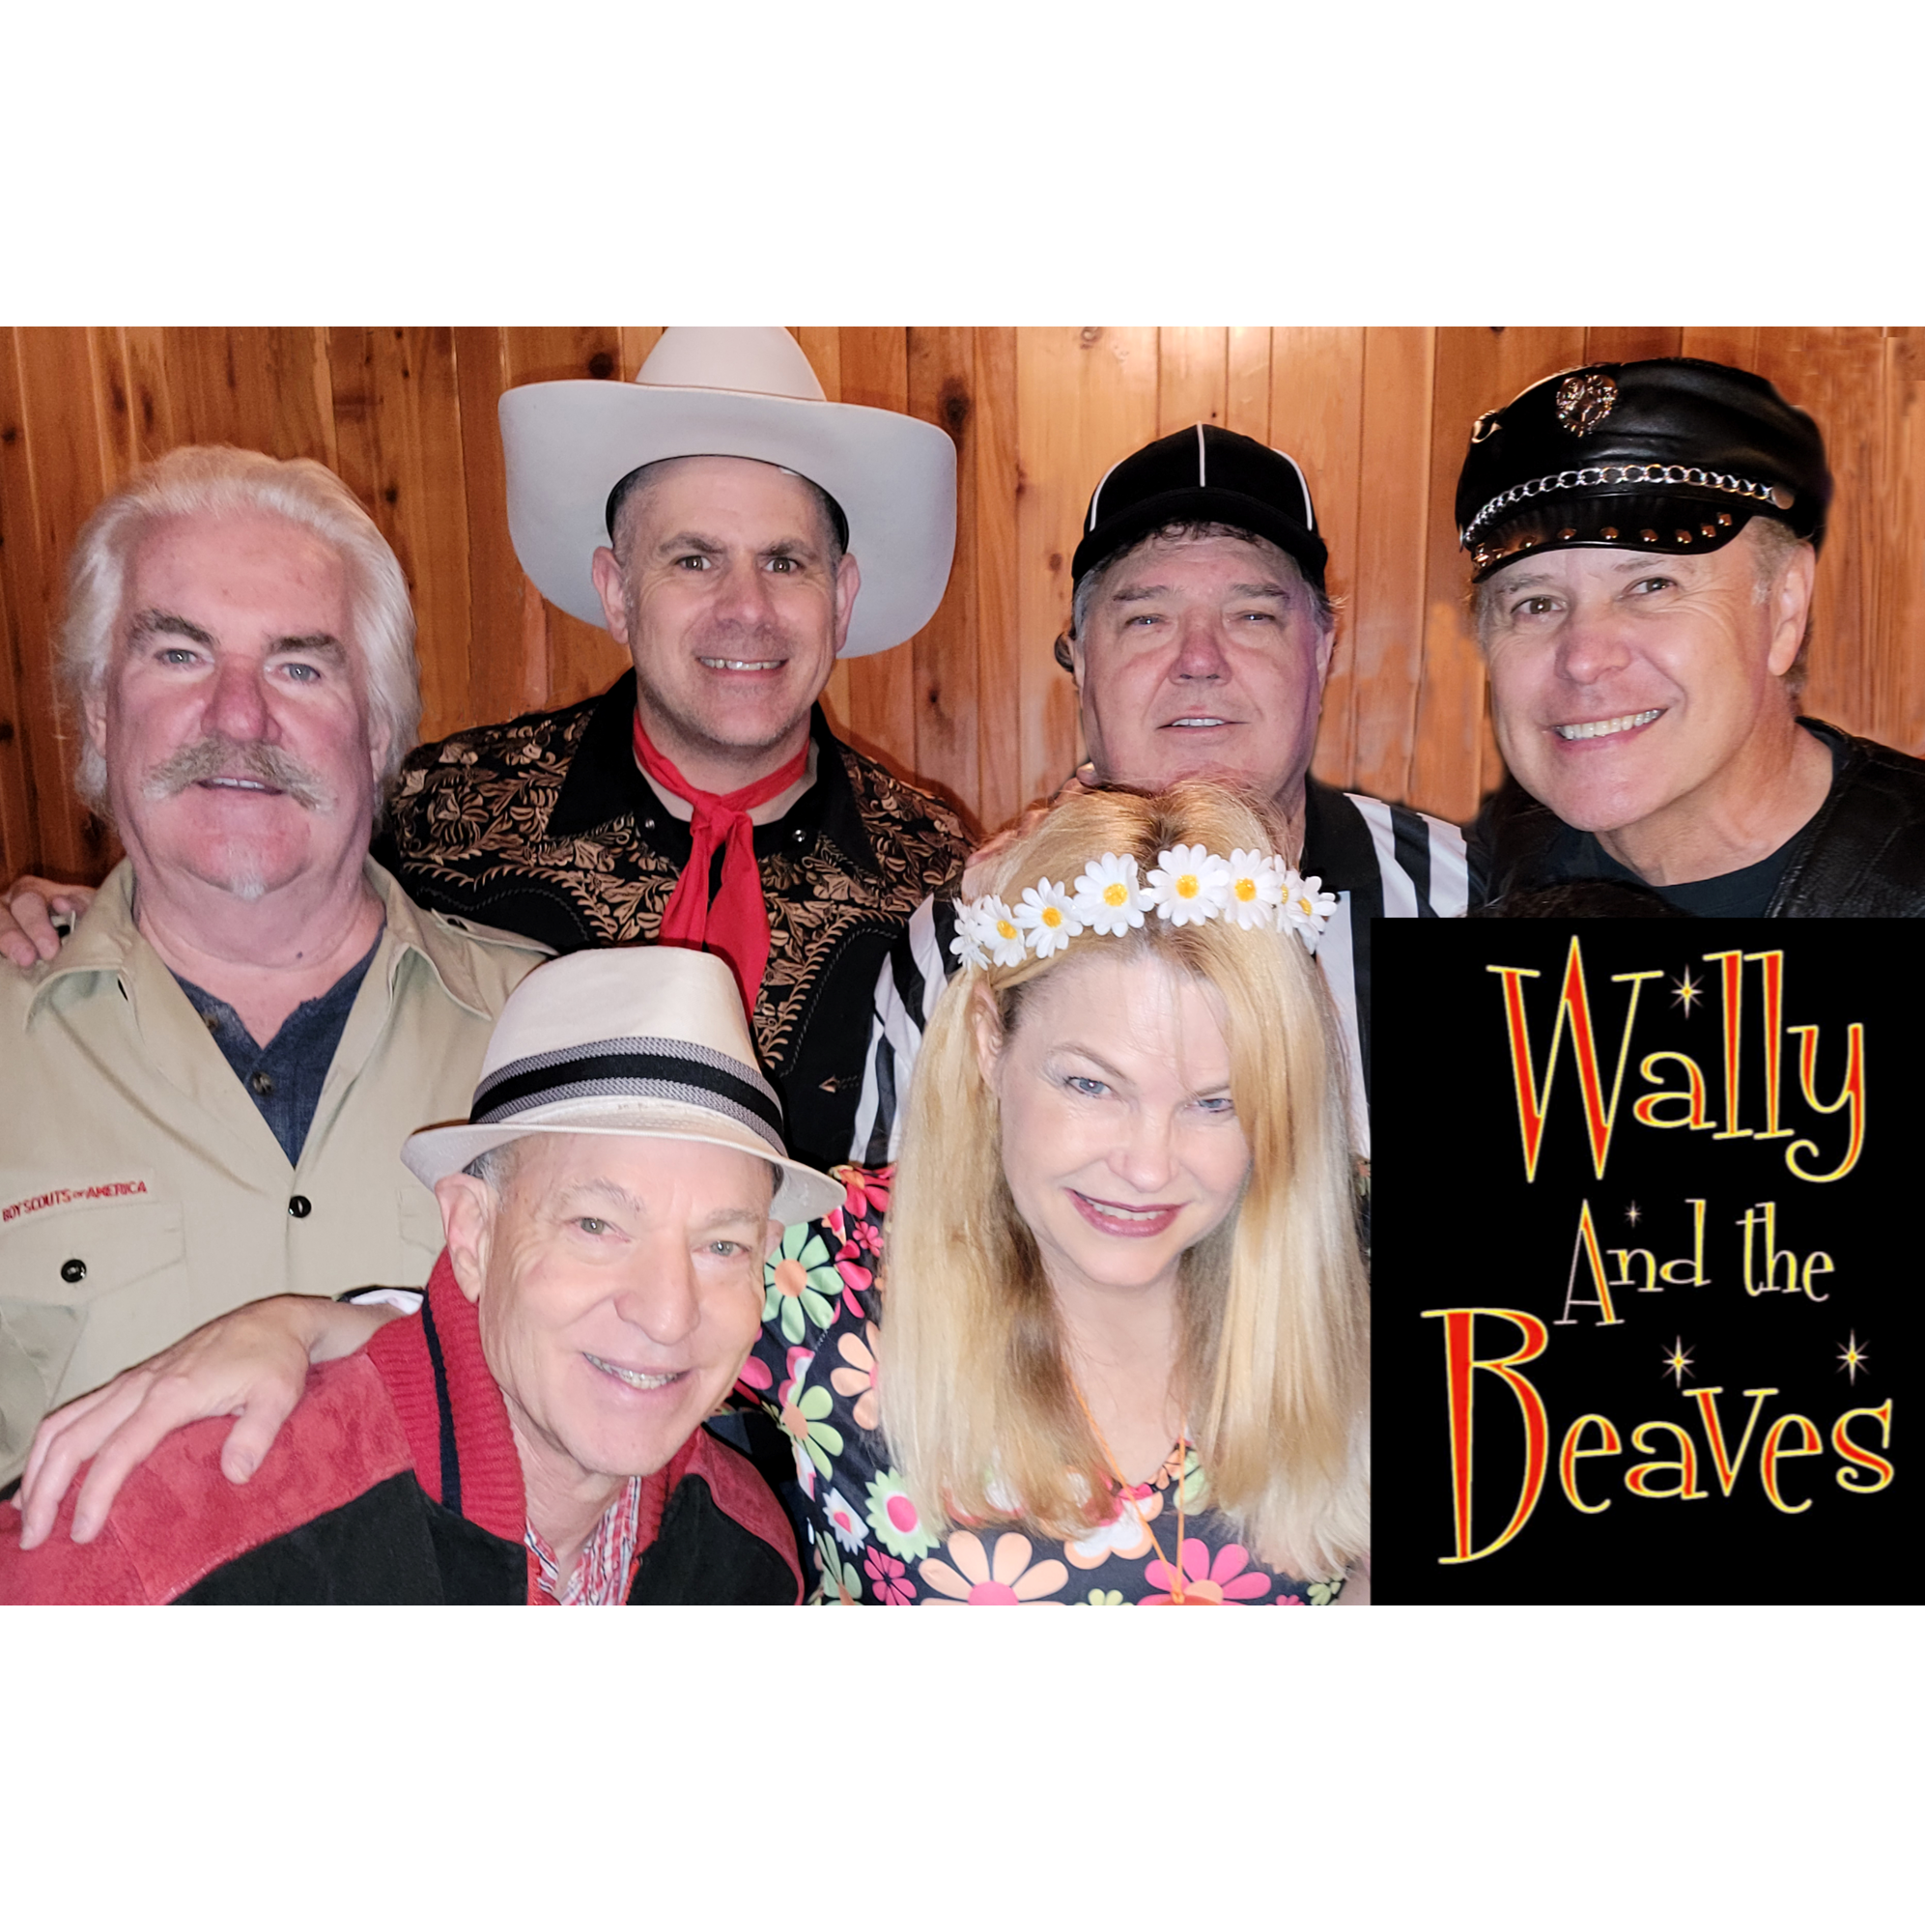 Wally & The Beaves